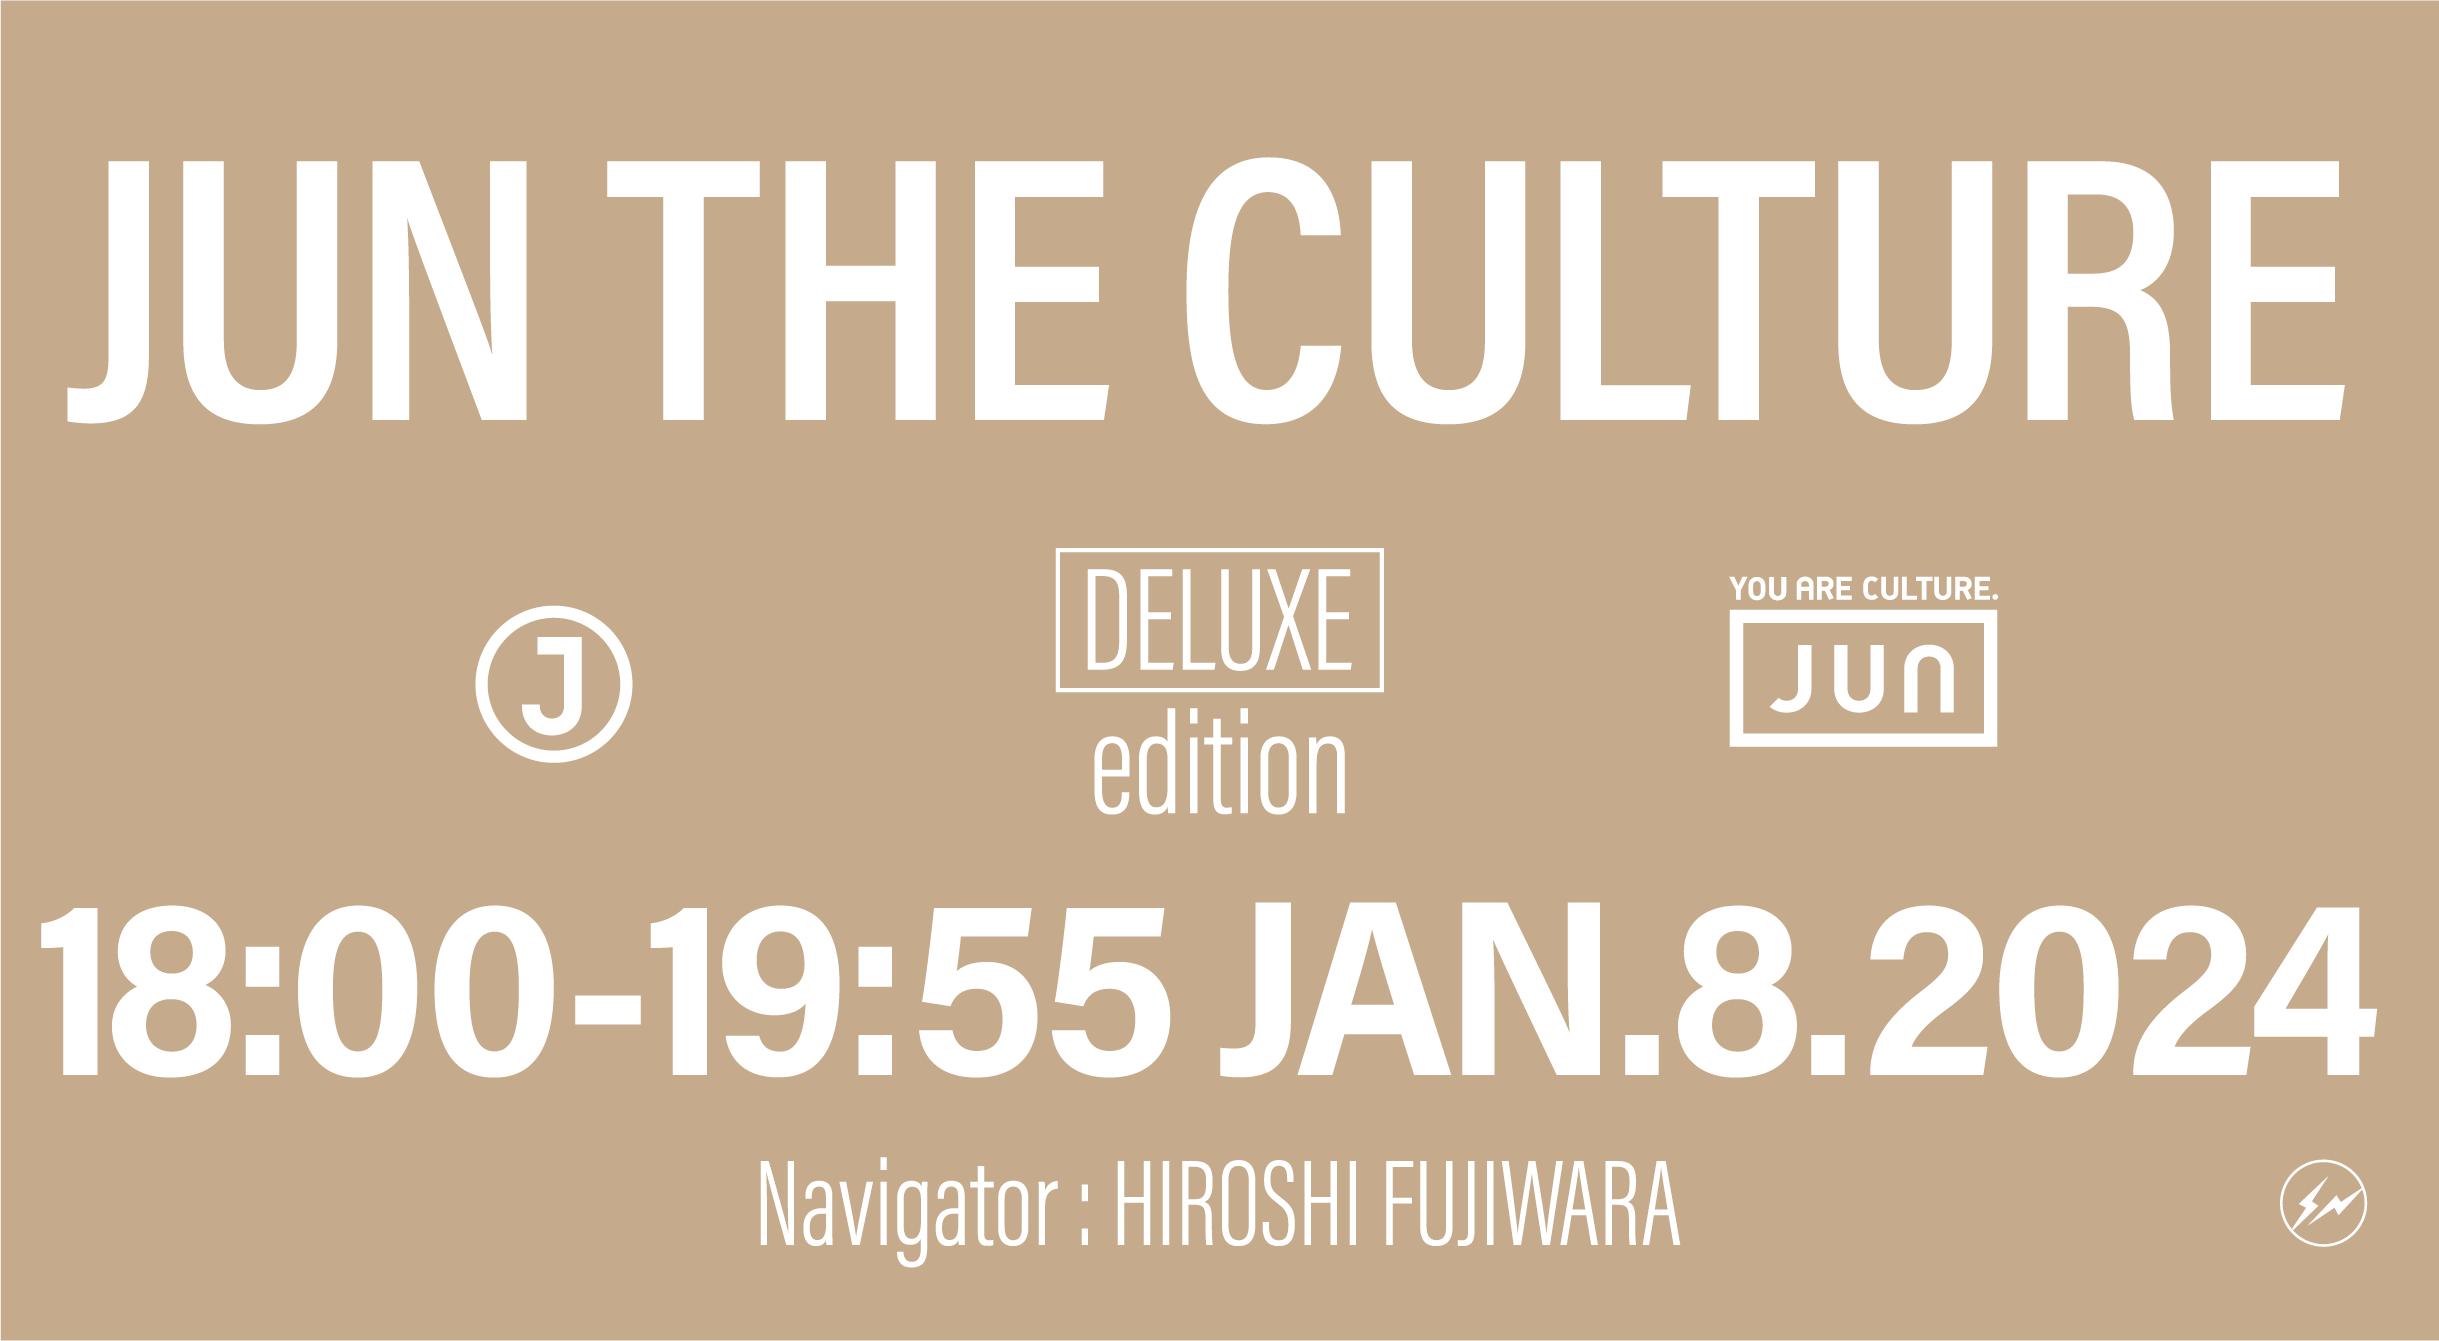 JUN THE CULTURE DELUXE edition 18:00-19:55 JAN.8.2024 Navigator: HIROSHI FUJIWARA